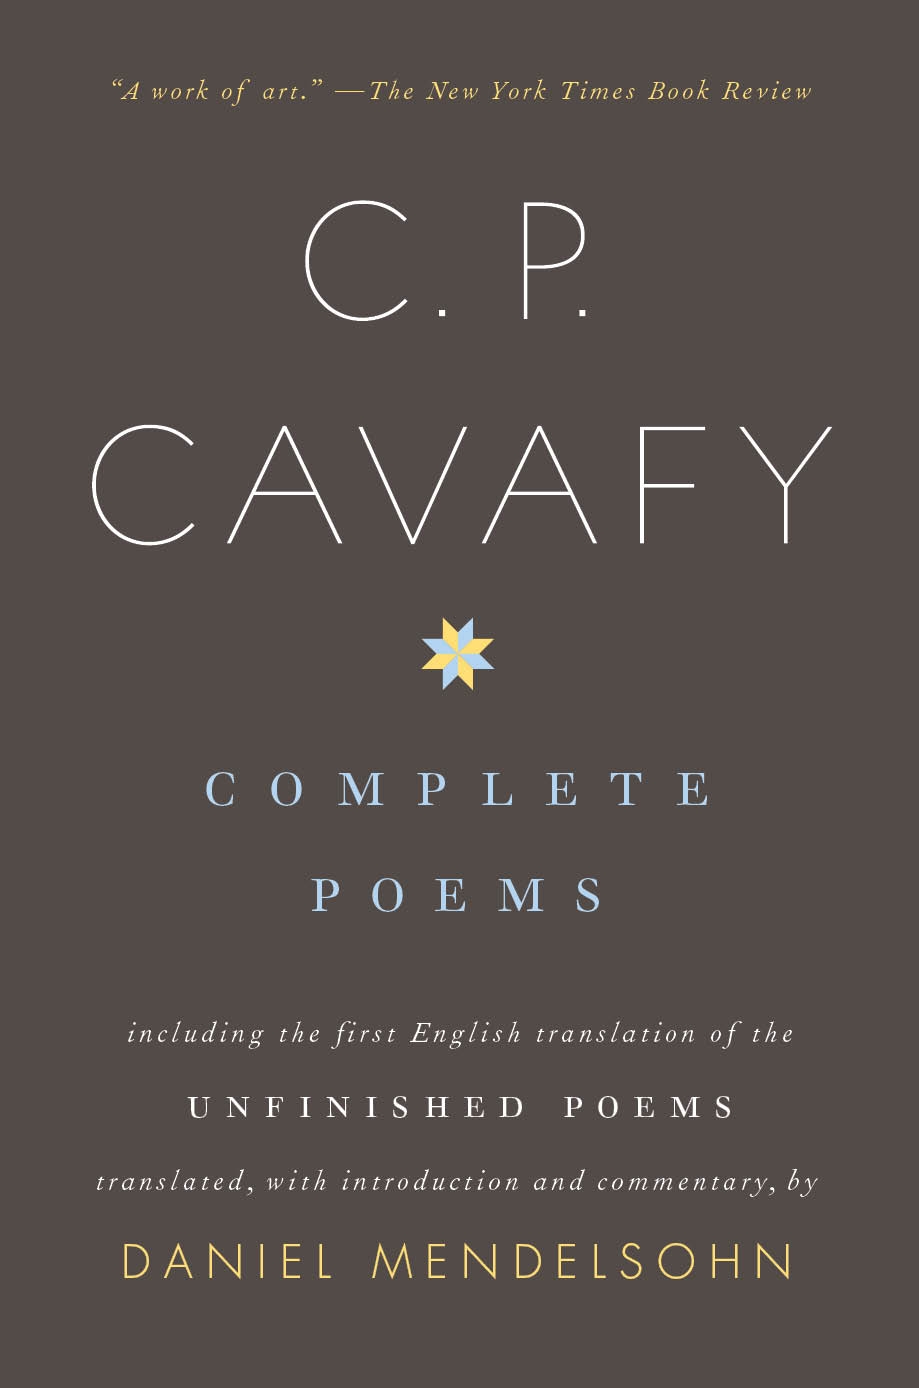 Cavafy Poems